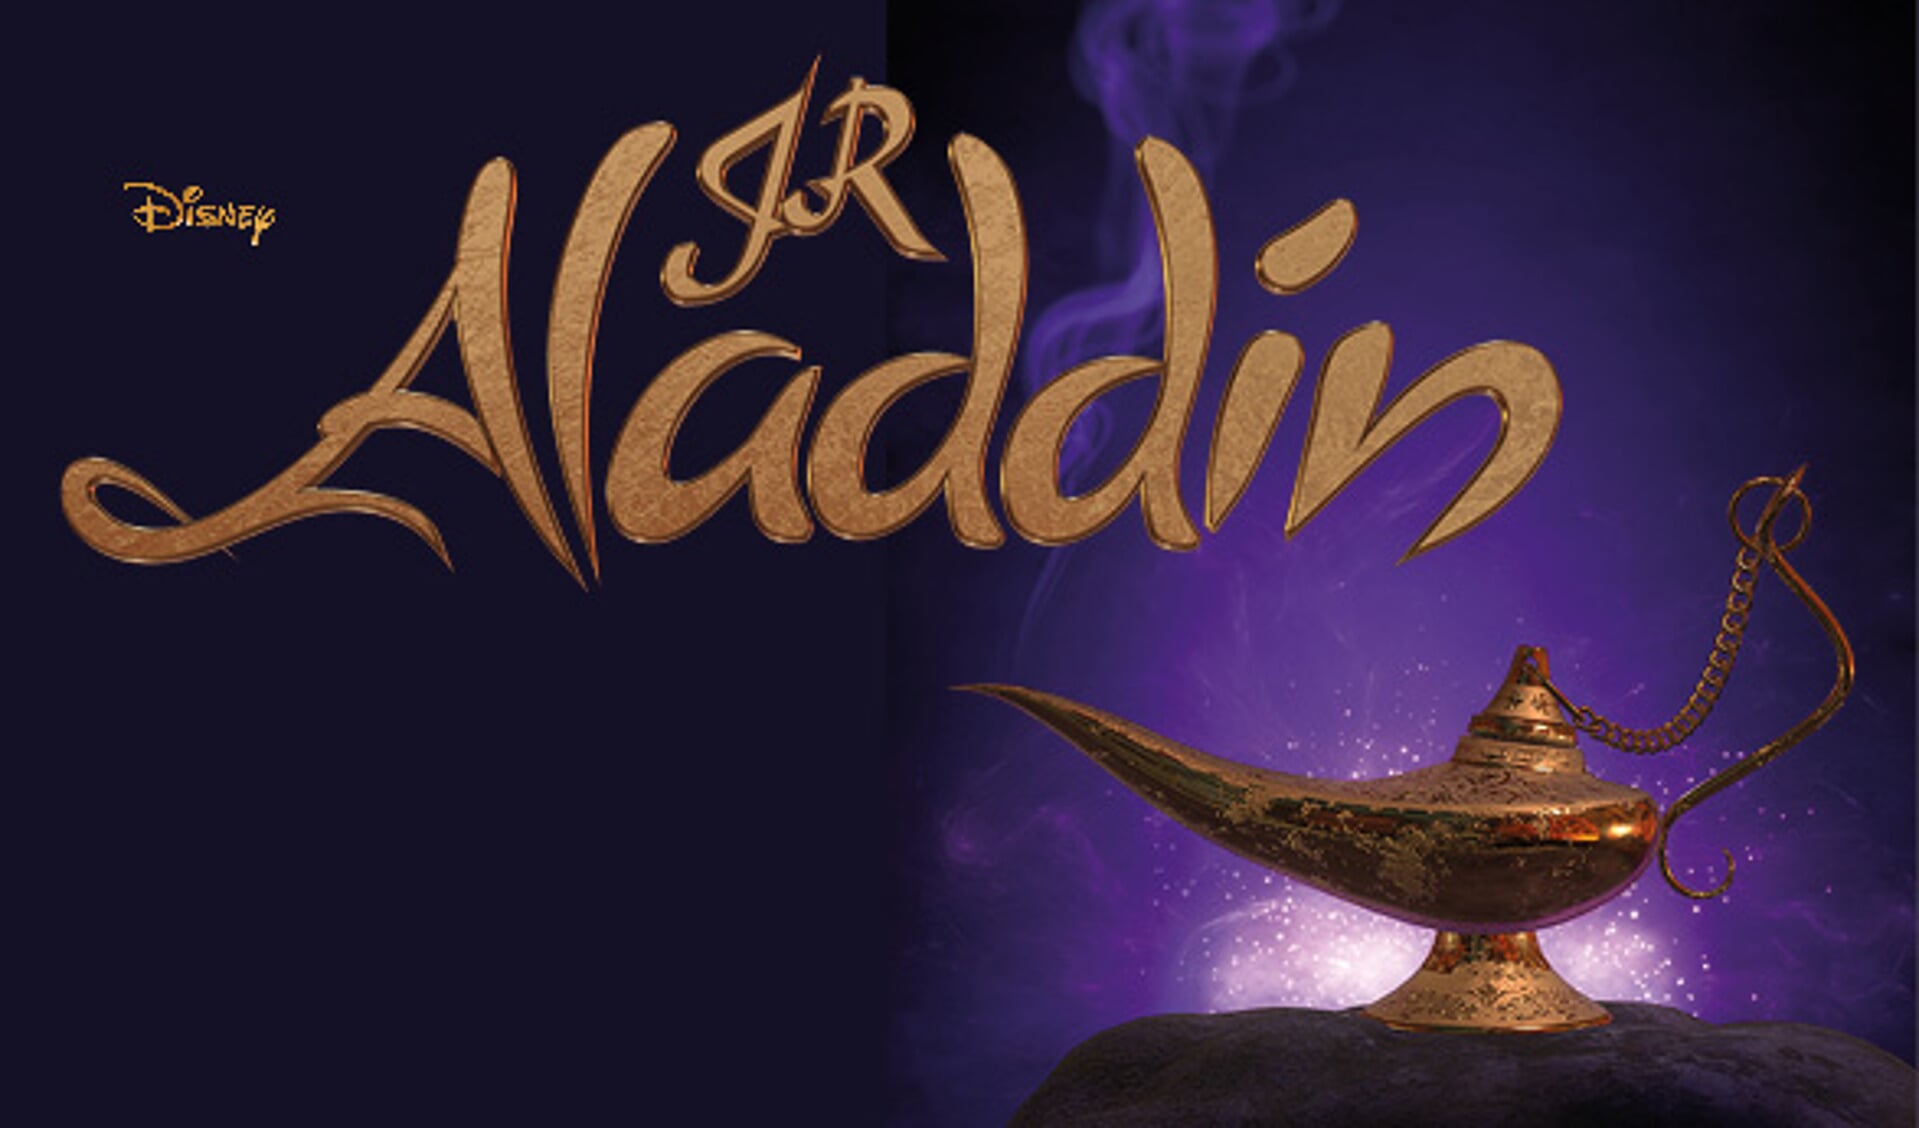 De bekende lamp uit de musical Aladdin. 